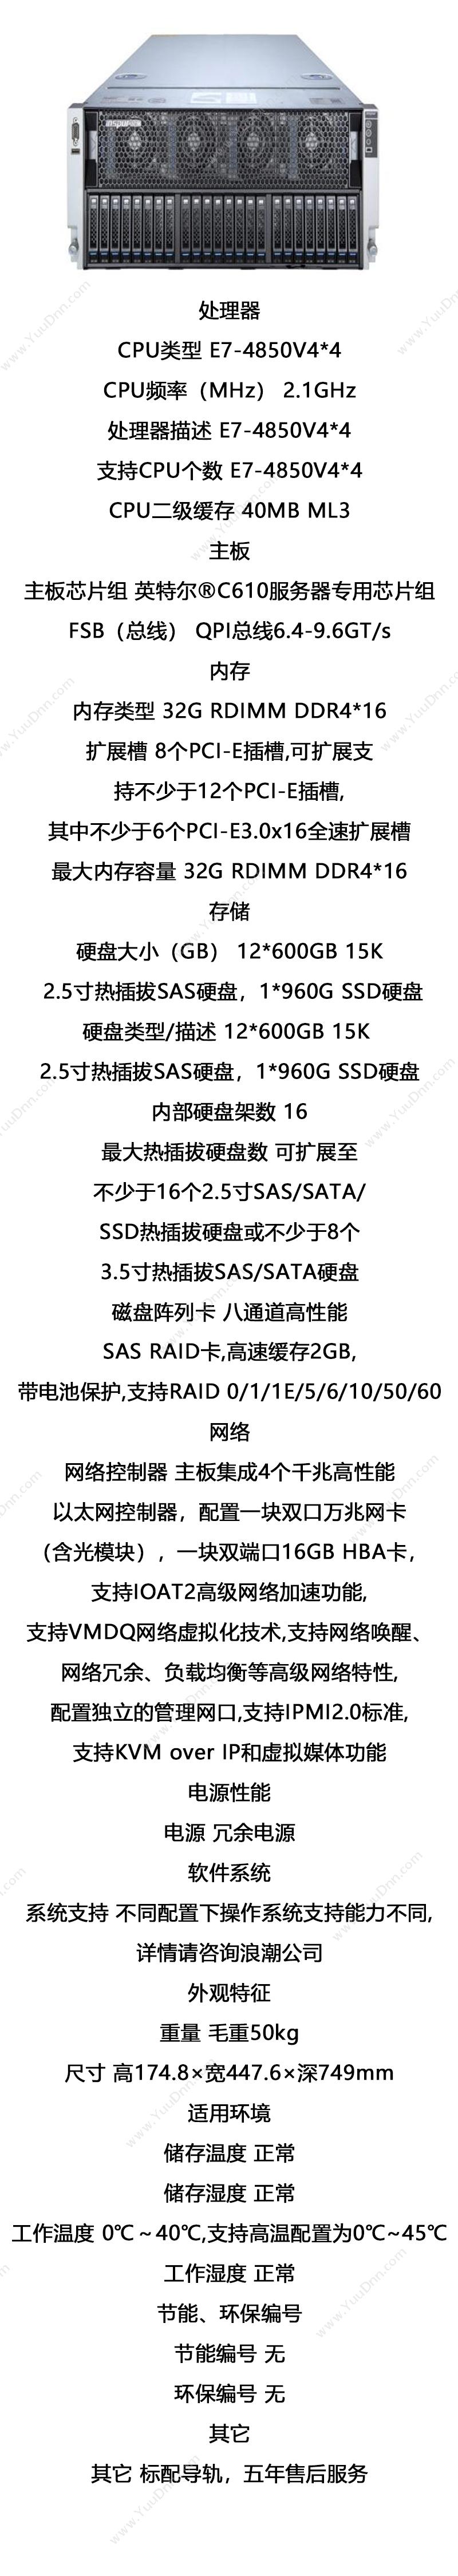 浪潮 Inspur NF8460M4(E7-4850v4*4/32G DDR4*16/600G SAS(15K） 服务器 高174.8×宽447.6×深749mm 塔式服务器